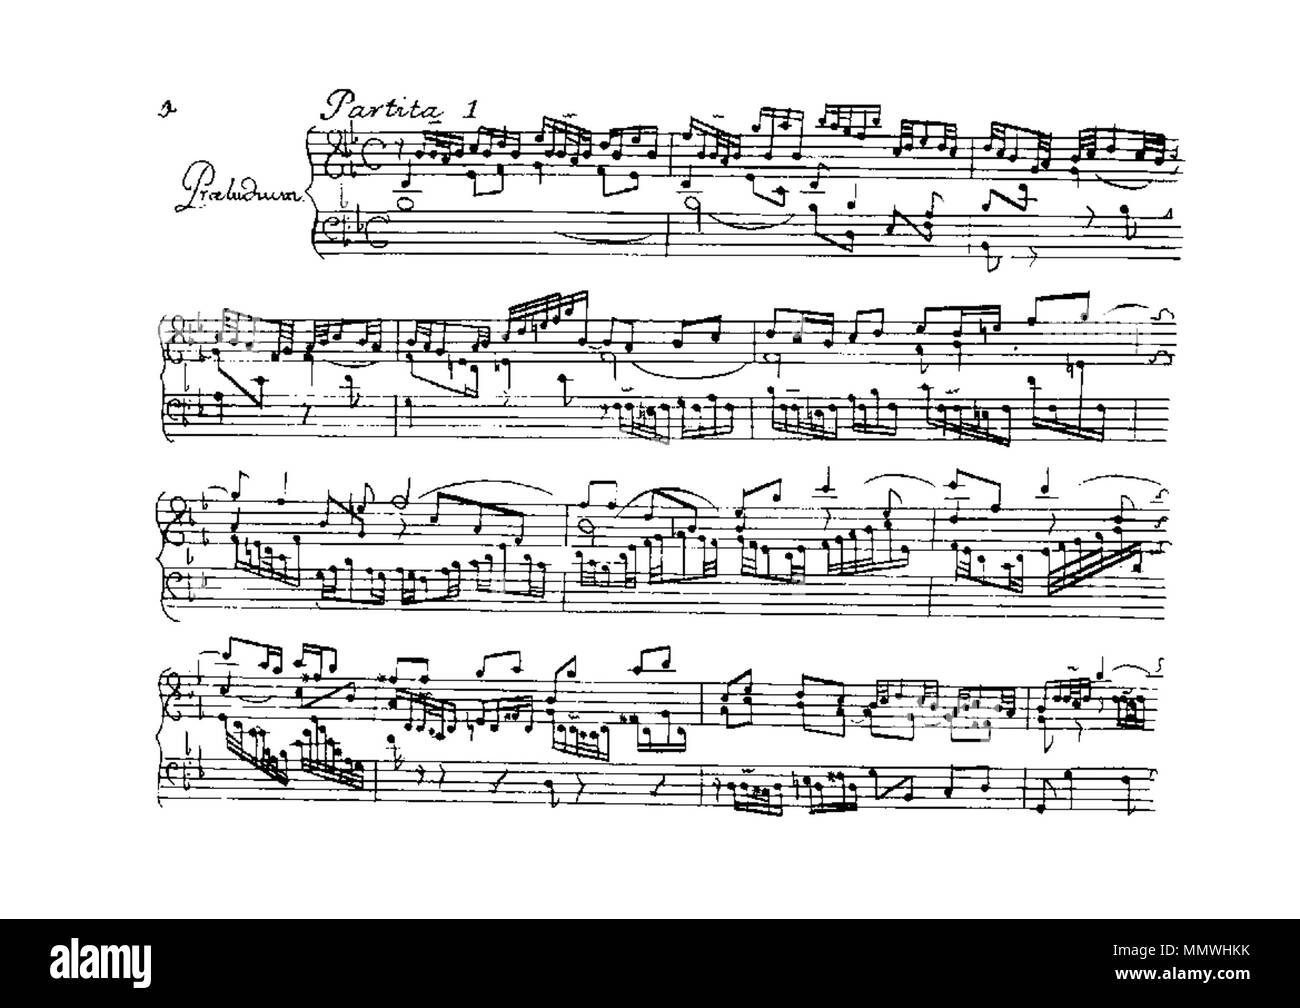 English: Opening Praeludium from Partita I, BWV 825, of Clavier-Übung I .  1731. Johann Sebastian Bach (1685–1750) Alternative names J. S. Bach; Bach;  J.S. Bach; J S Bach Description German composer